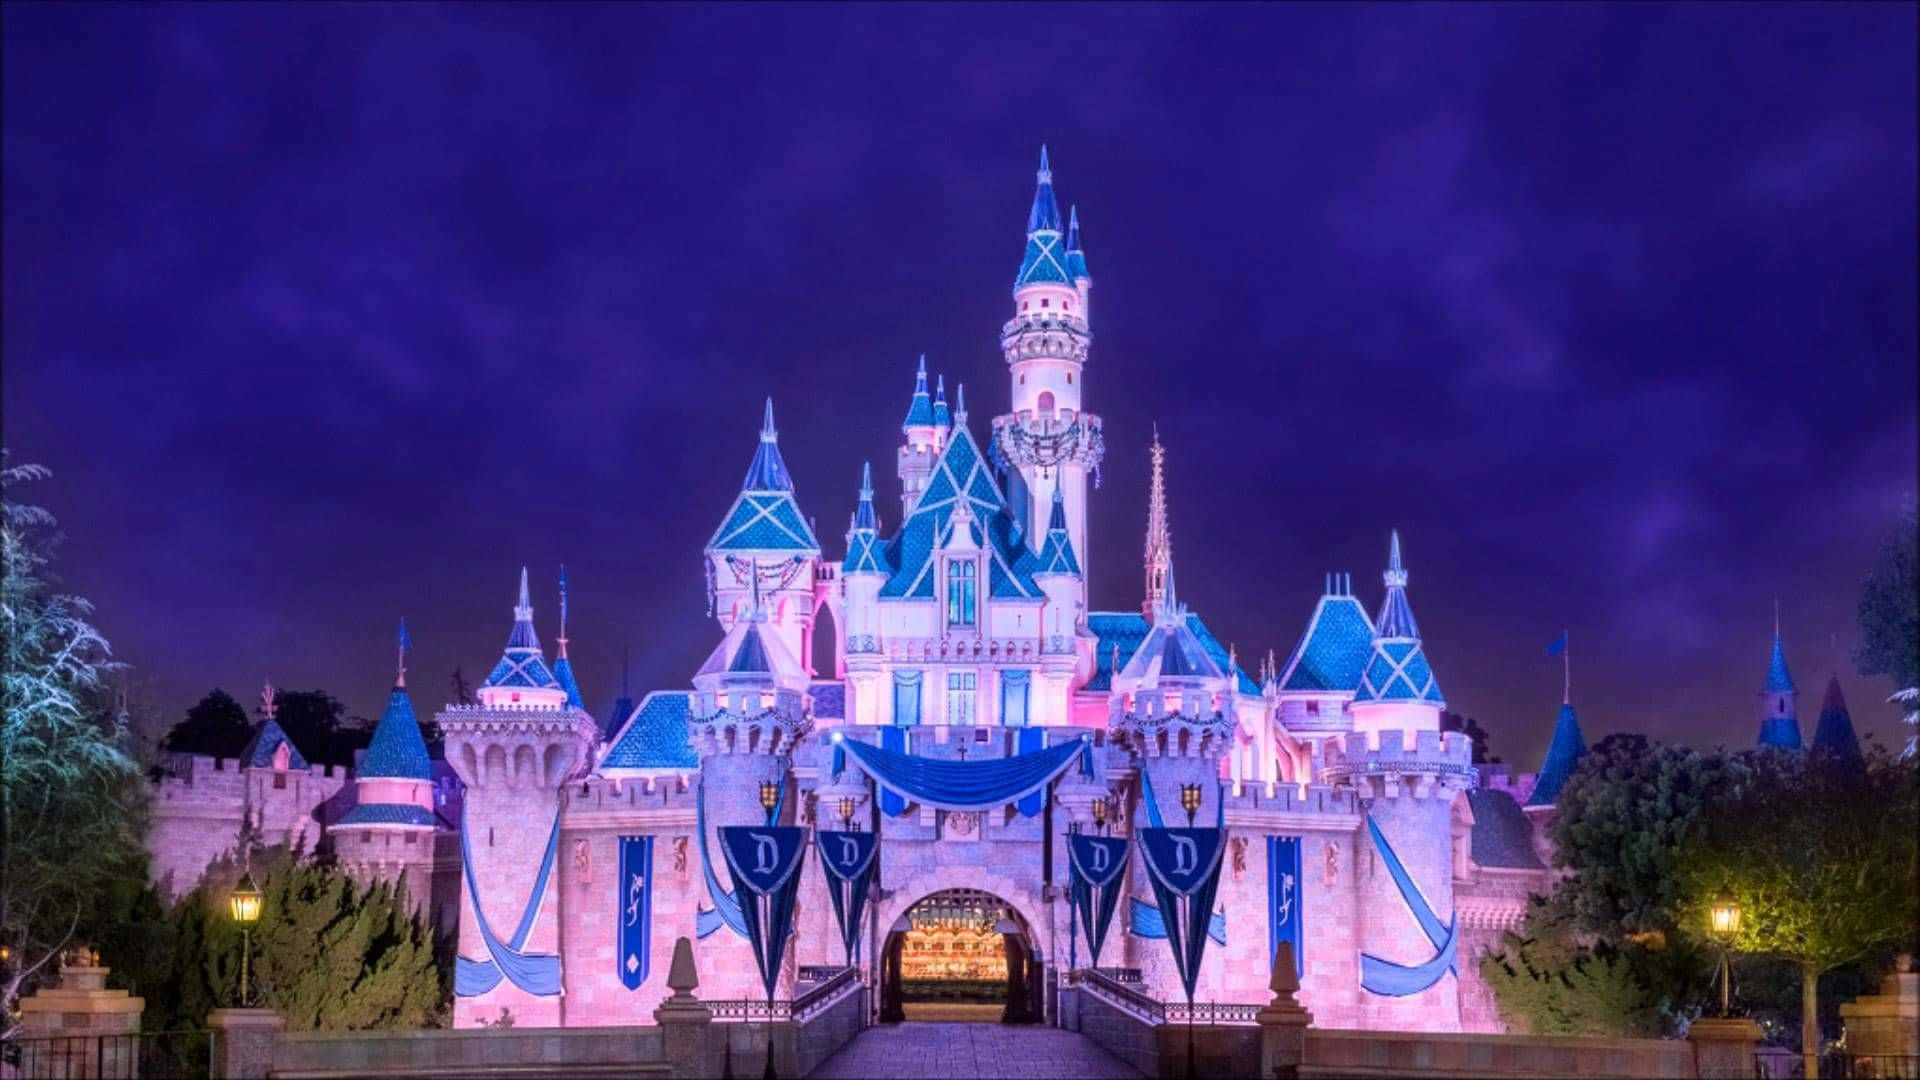 Awaken the Magic of Dreams at Disney Castle